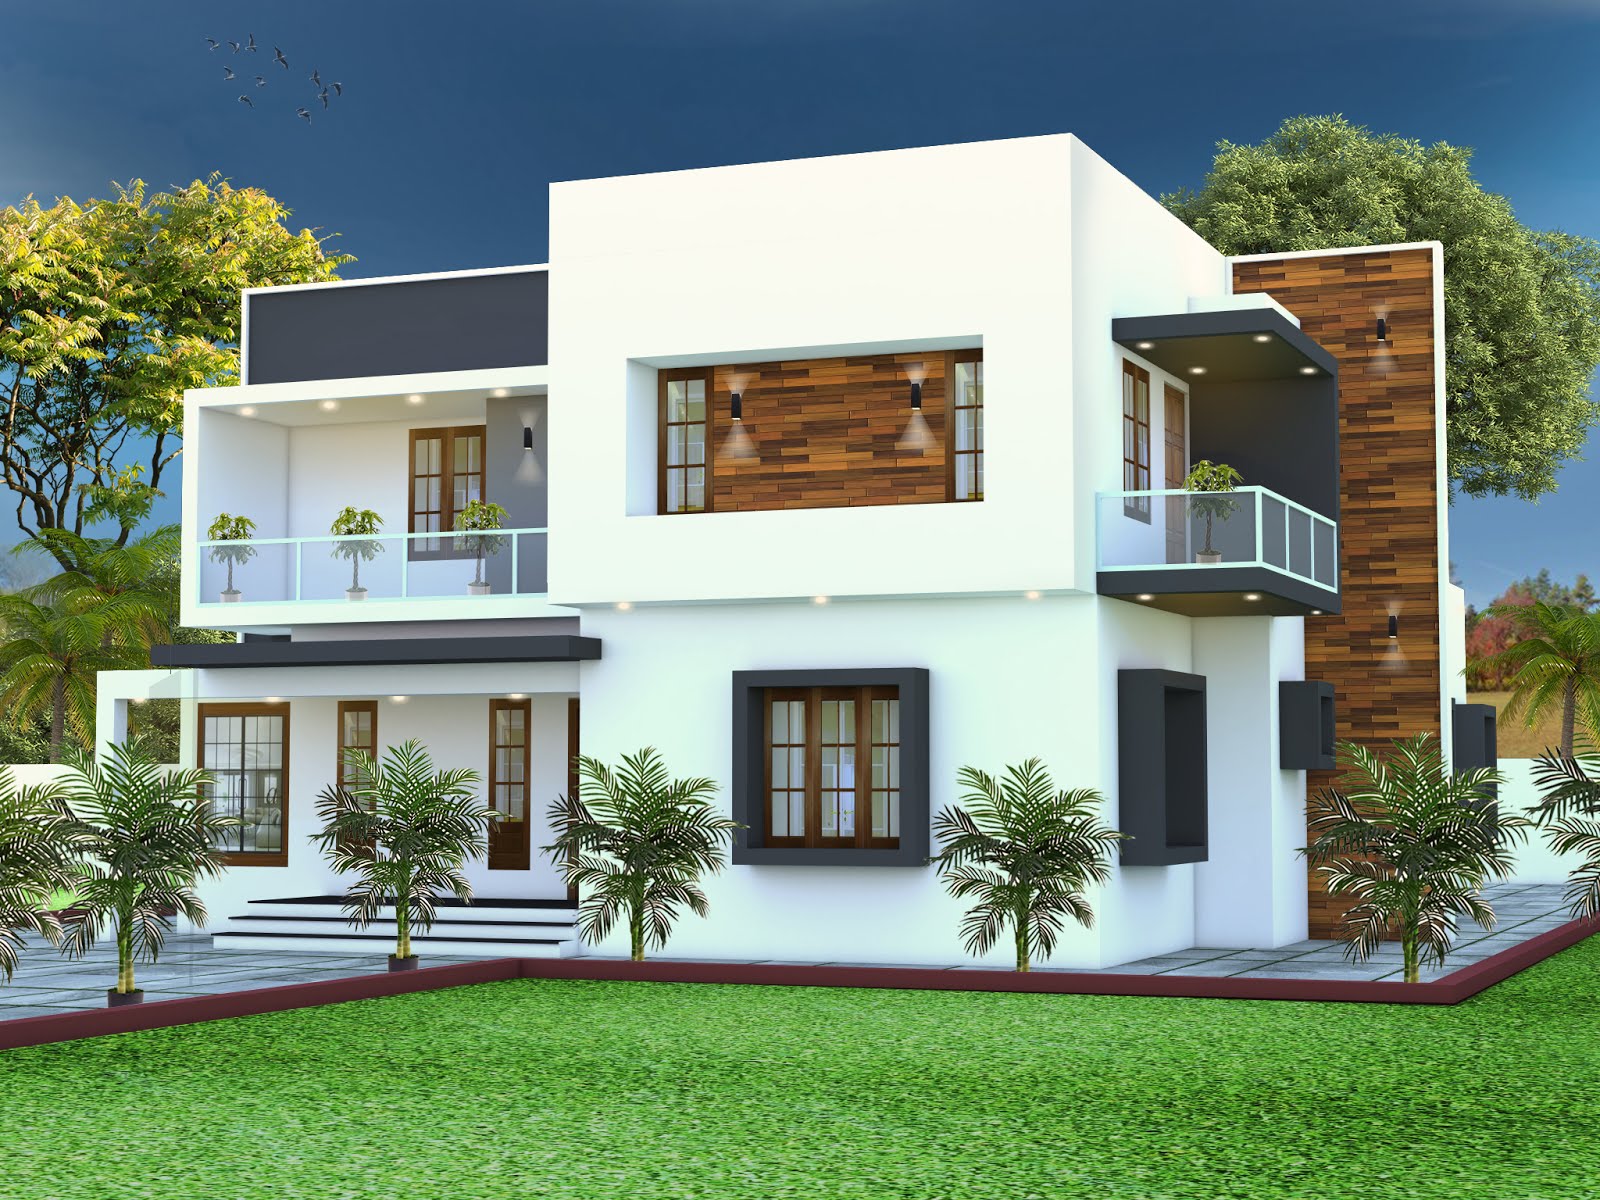 KERALA HOME DESIGNS AND CONSTRUCTION : Kerala home designs